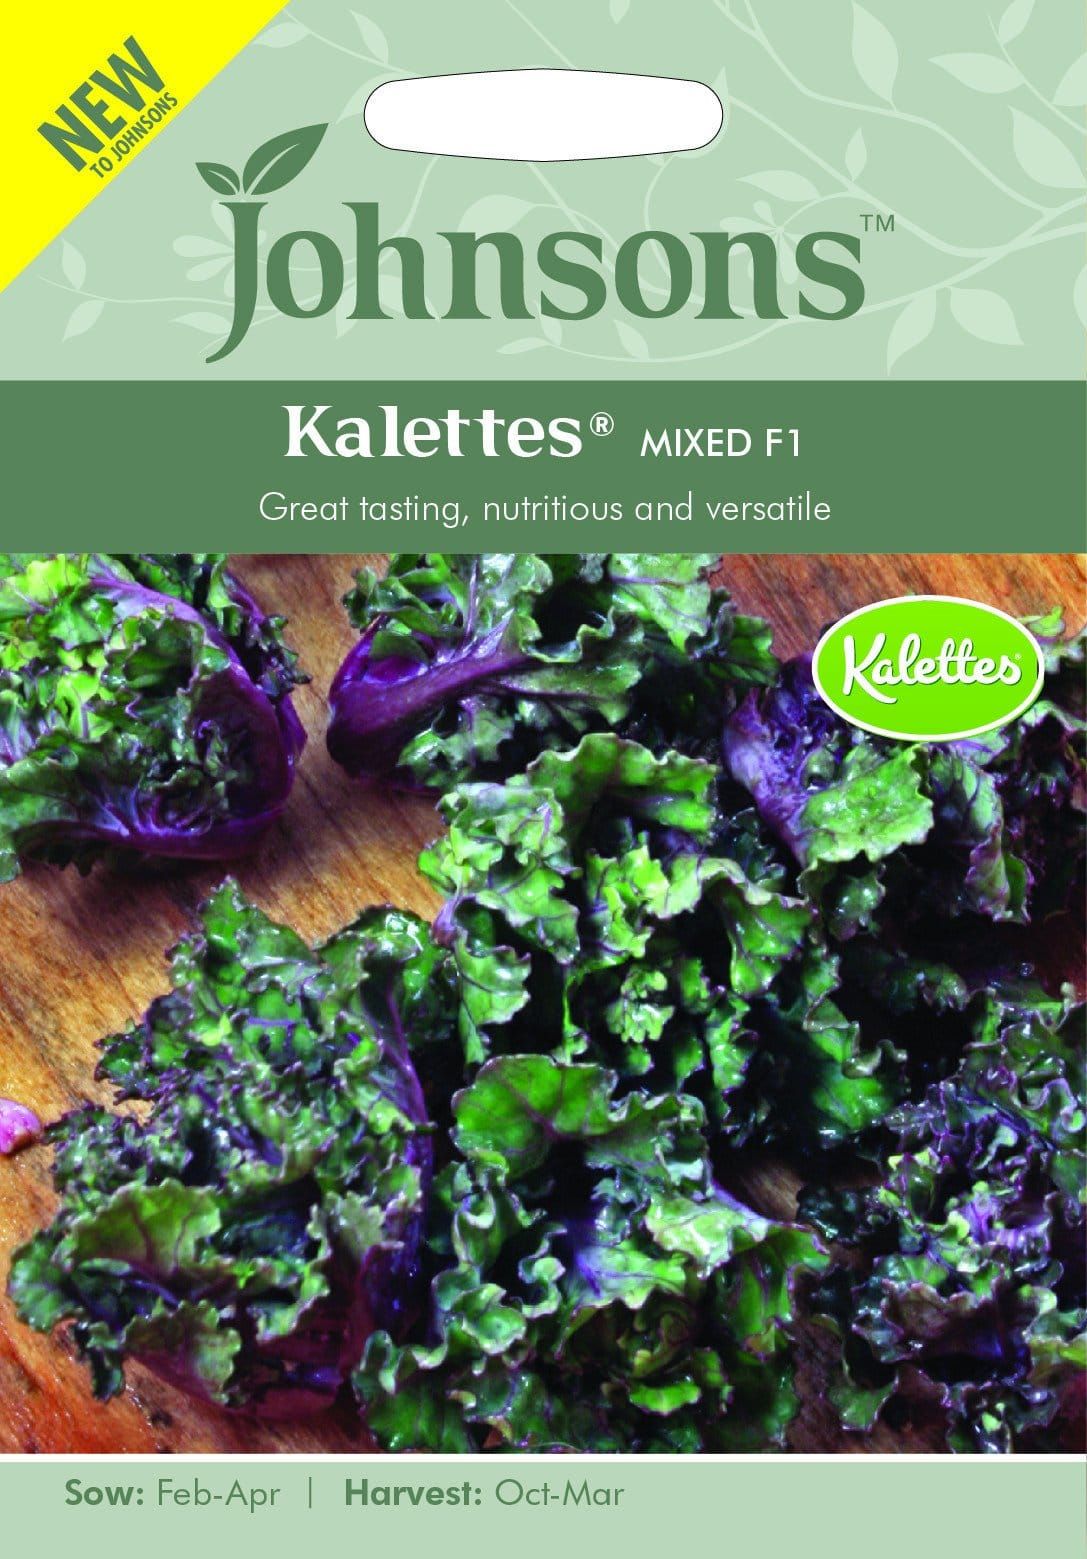 Johnsons Kalettes Mixed F1 25 Seeds